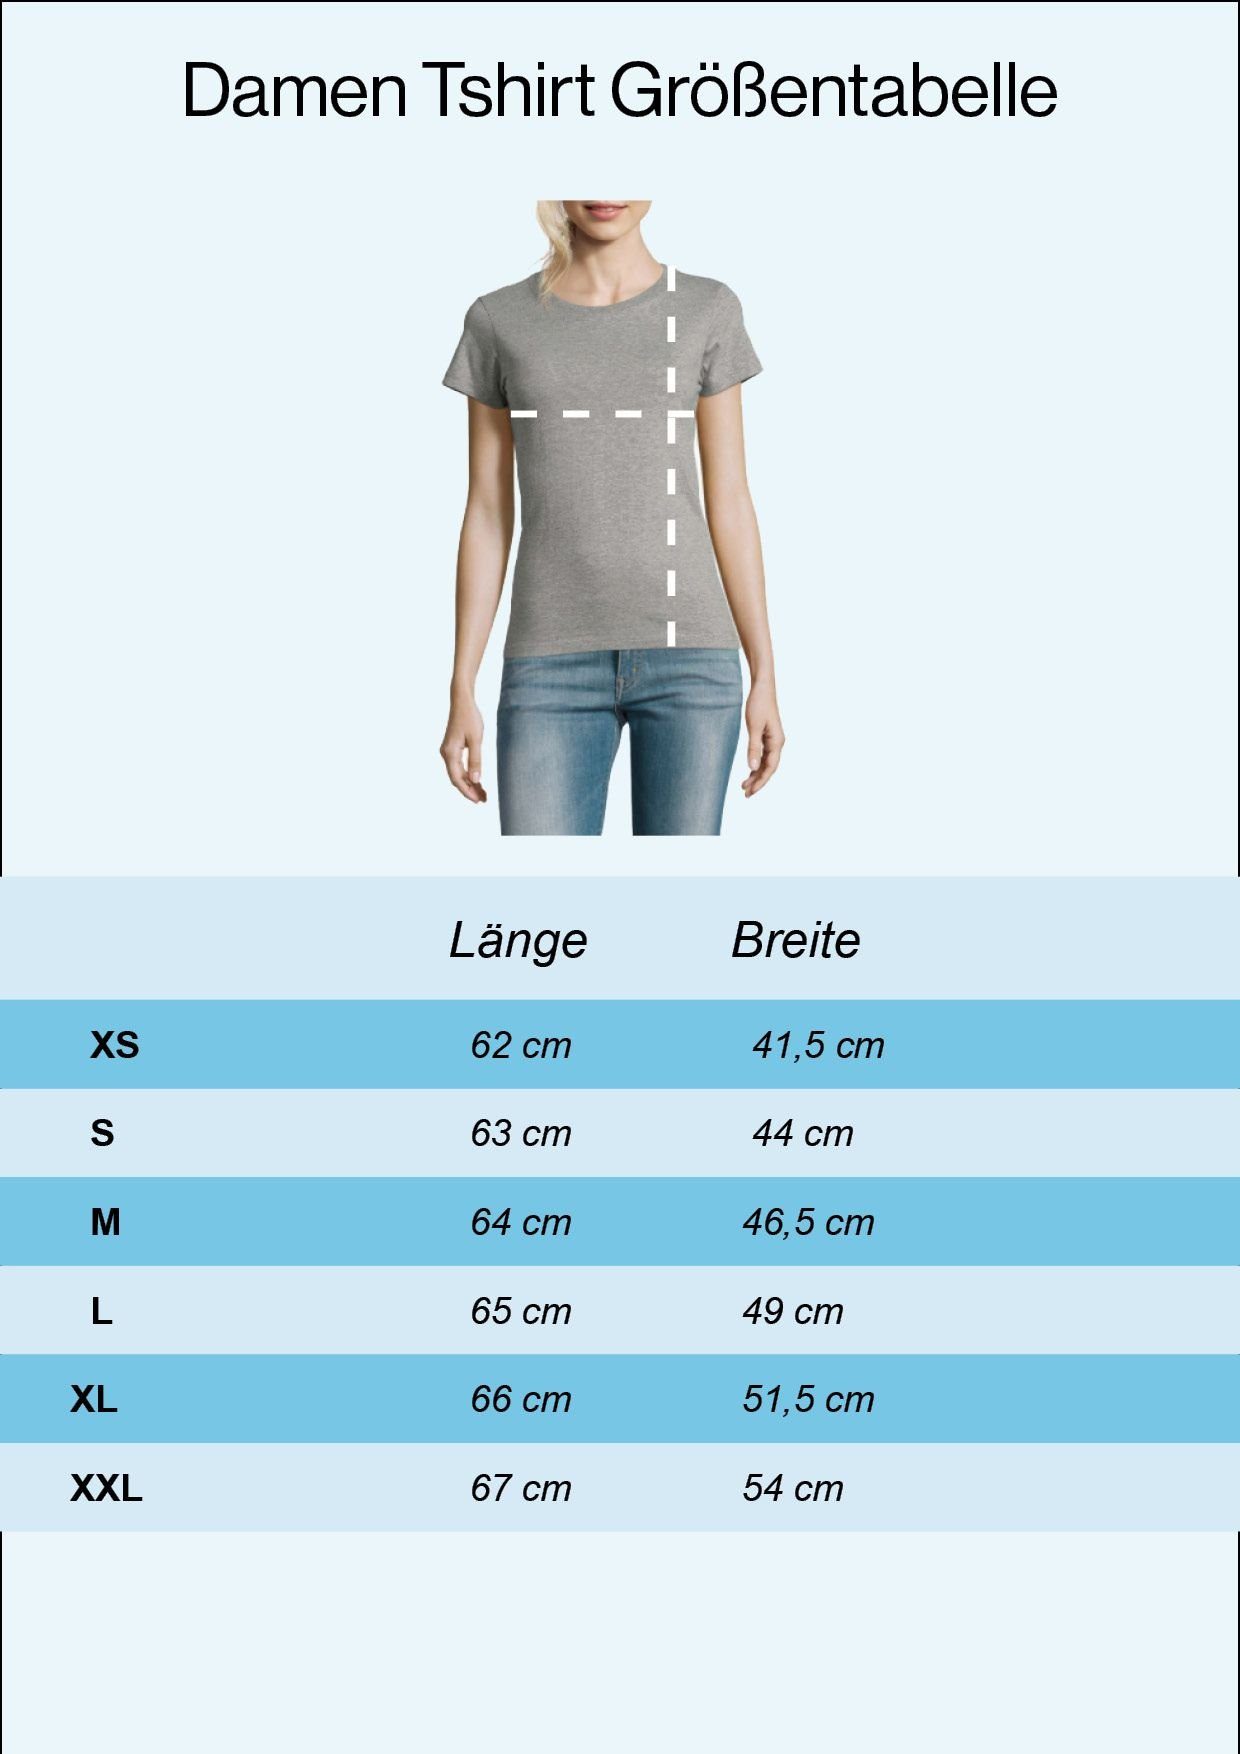 Designz Logo XO T-Shirt Youth Damen mit Grau trendigem T-Shirt